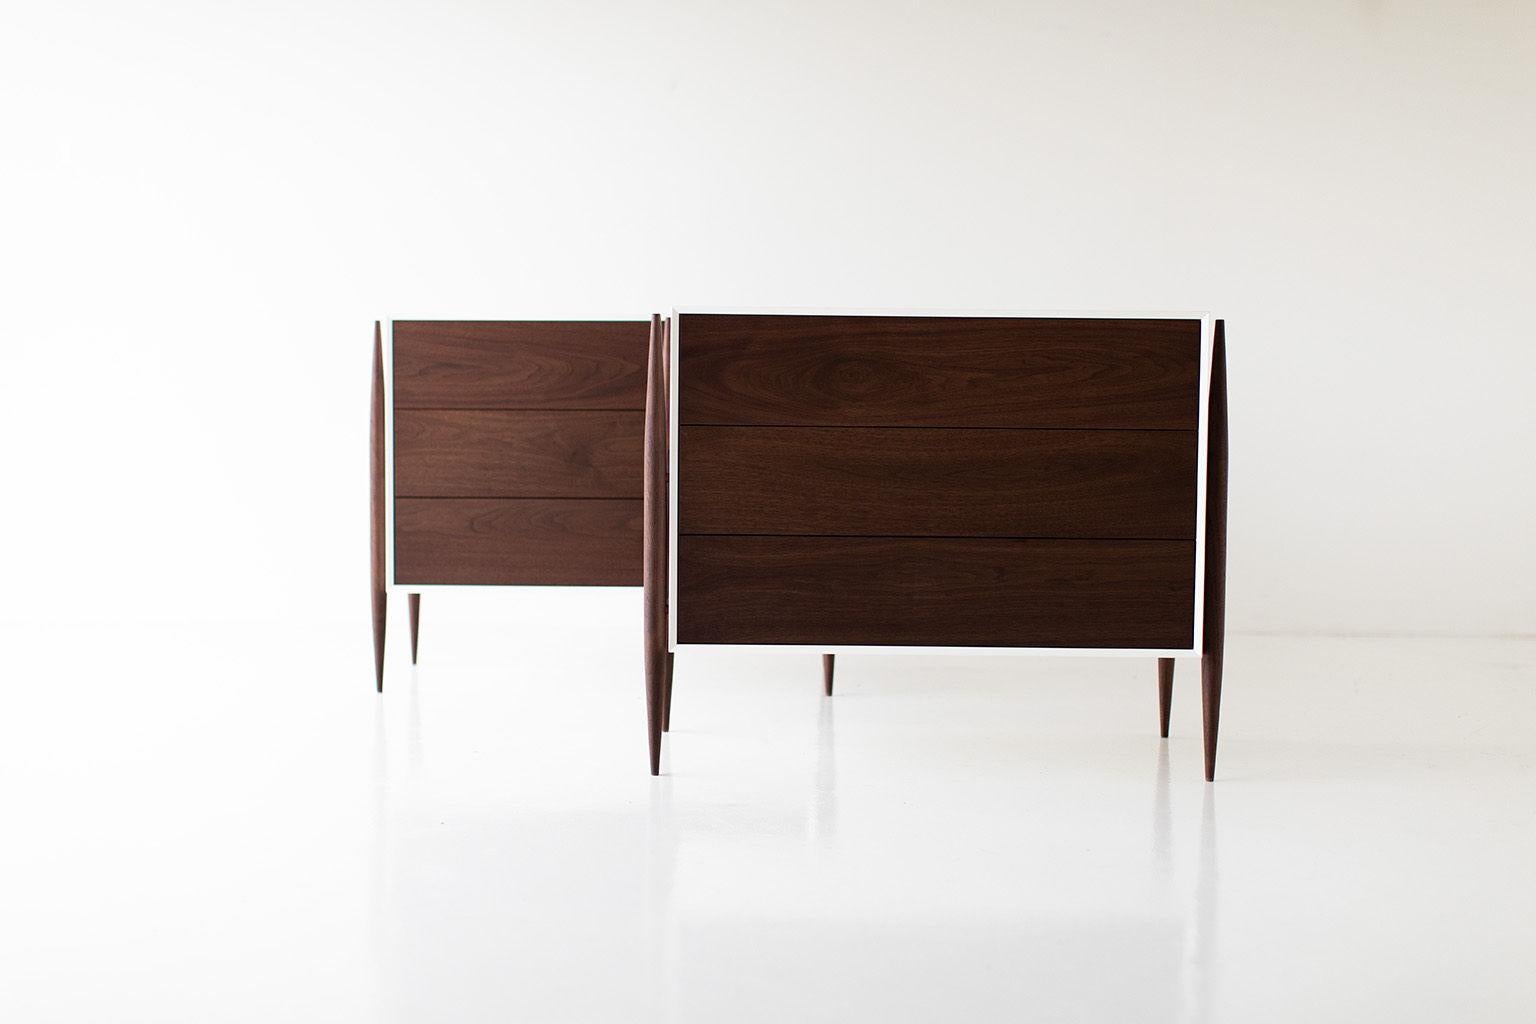 Designer: Laura Trenchard

Manufacturer: Craft Associates Modern Furniture
Period/Model: Mid-Century Modern
Specs: Maple, Walnut

Dimensions

H: 30.25 (76.84cm)
L: 37 (93.98cm)
D: 20 (45.72cm)

condition

This Laura Trenchard small